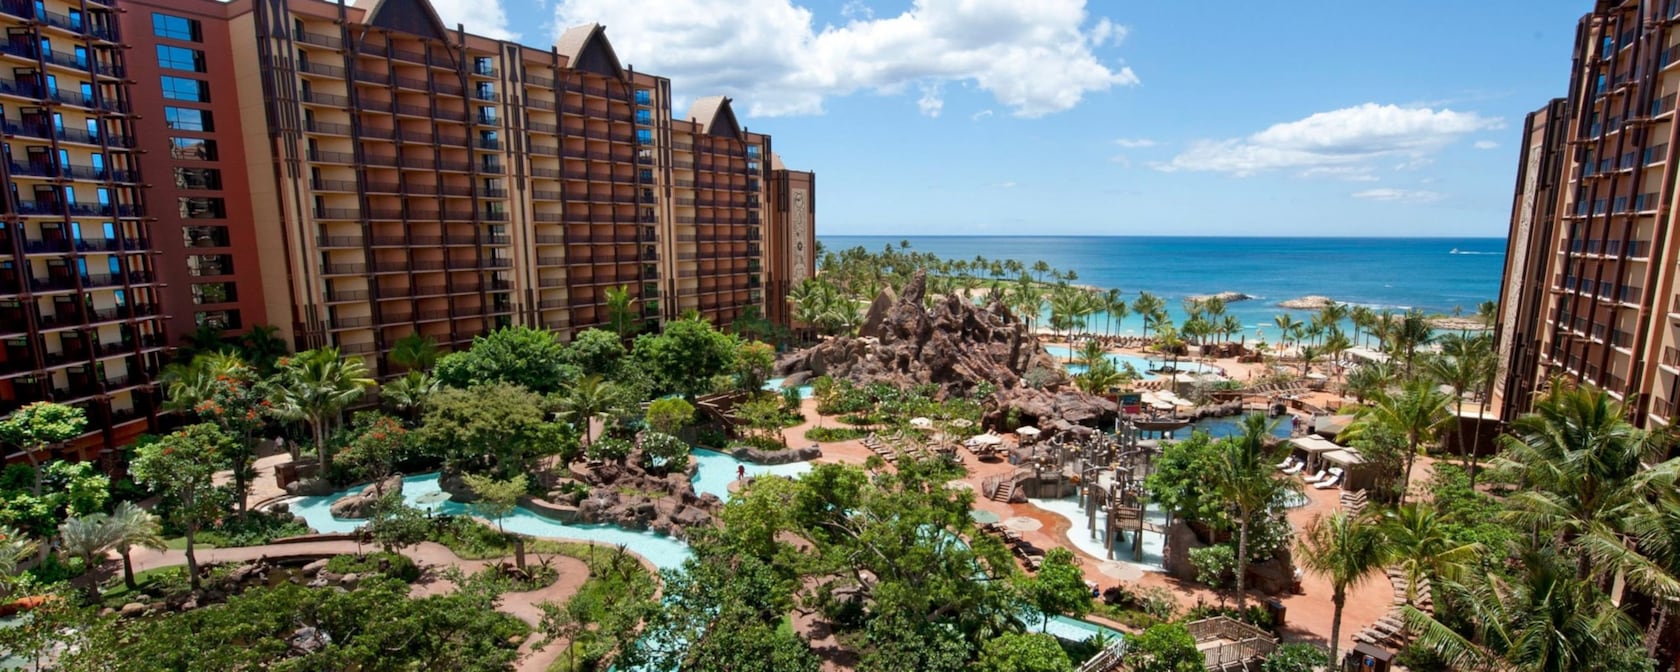 Aulani, Disney Vacation Club Villas – O'ahu, Hawai'i | Disney Vacation Club